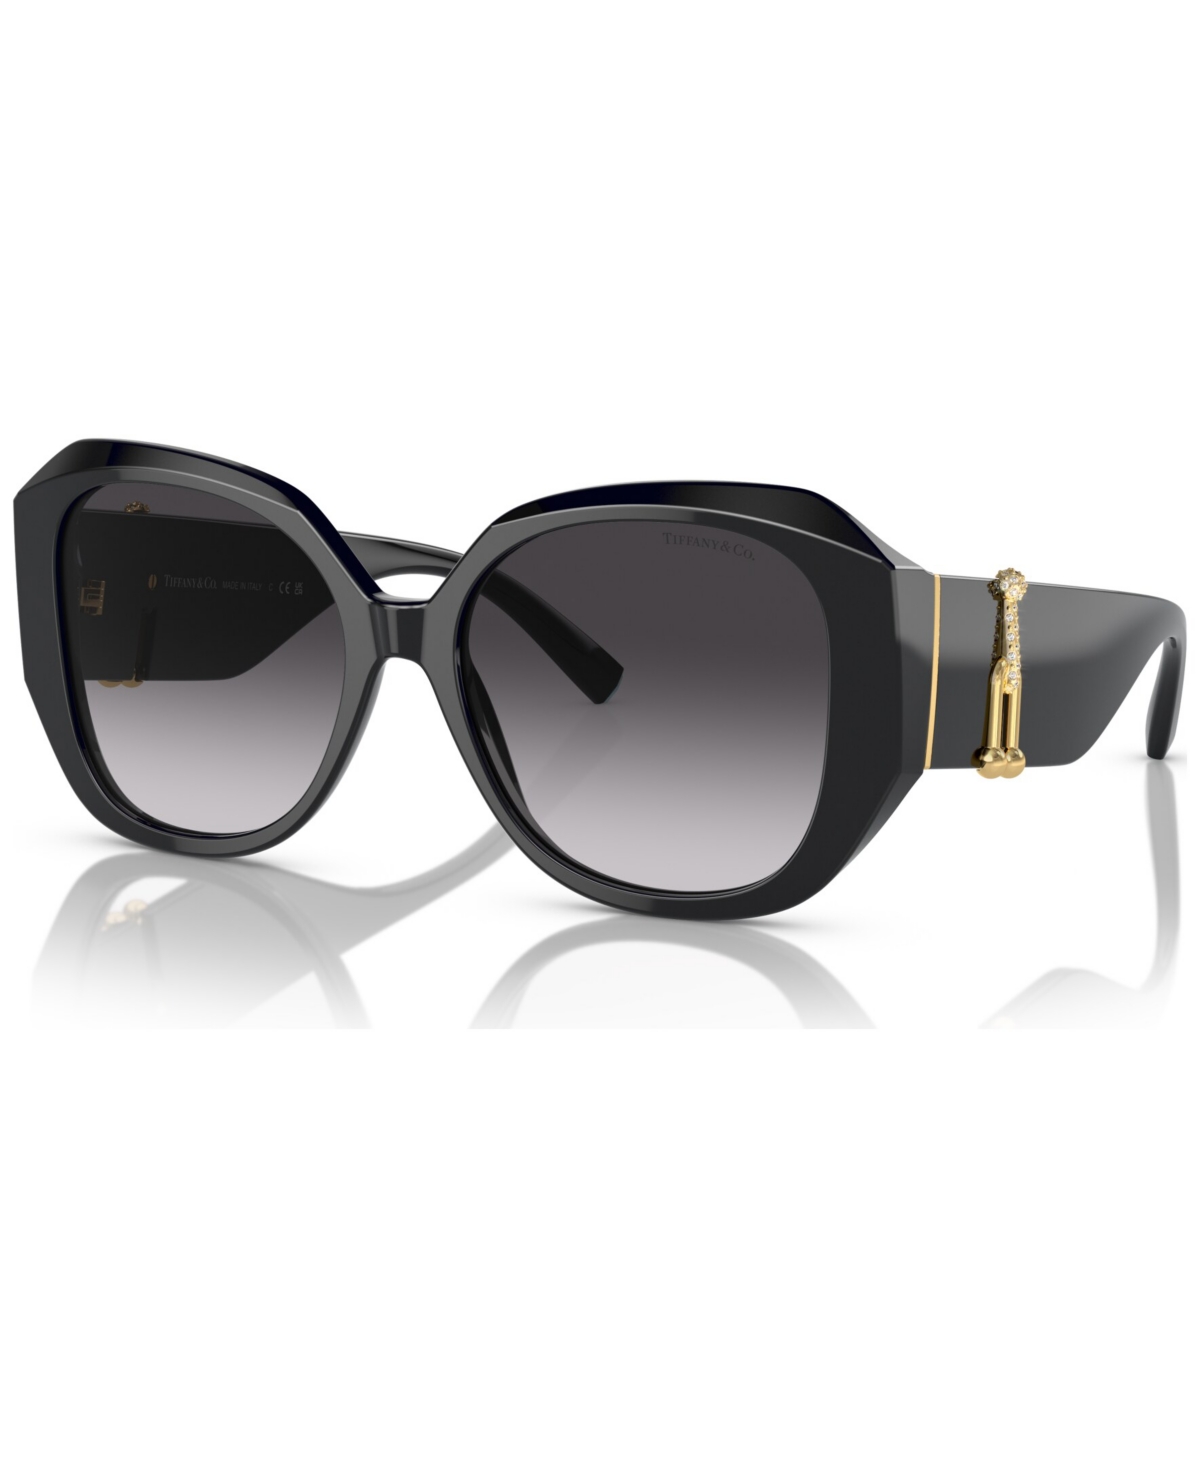 Tiffany & Co Women's Polarized Sunglasses, Tf4218 In Grey Gradient